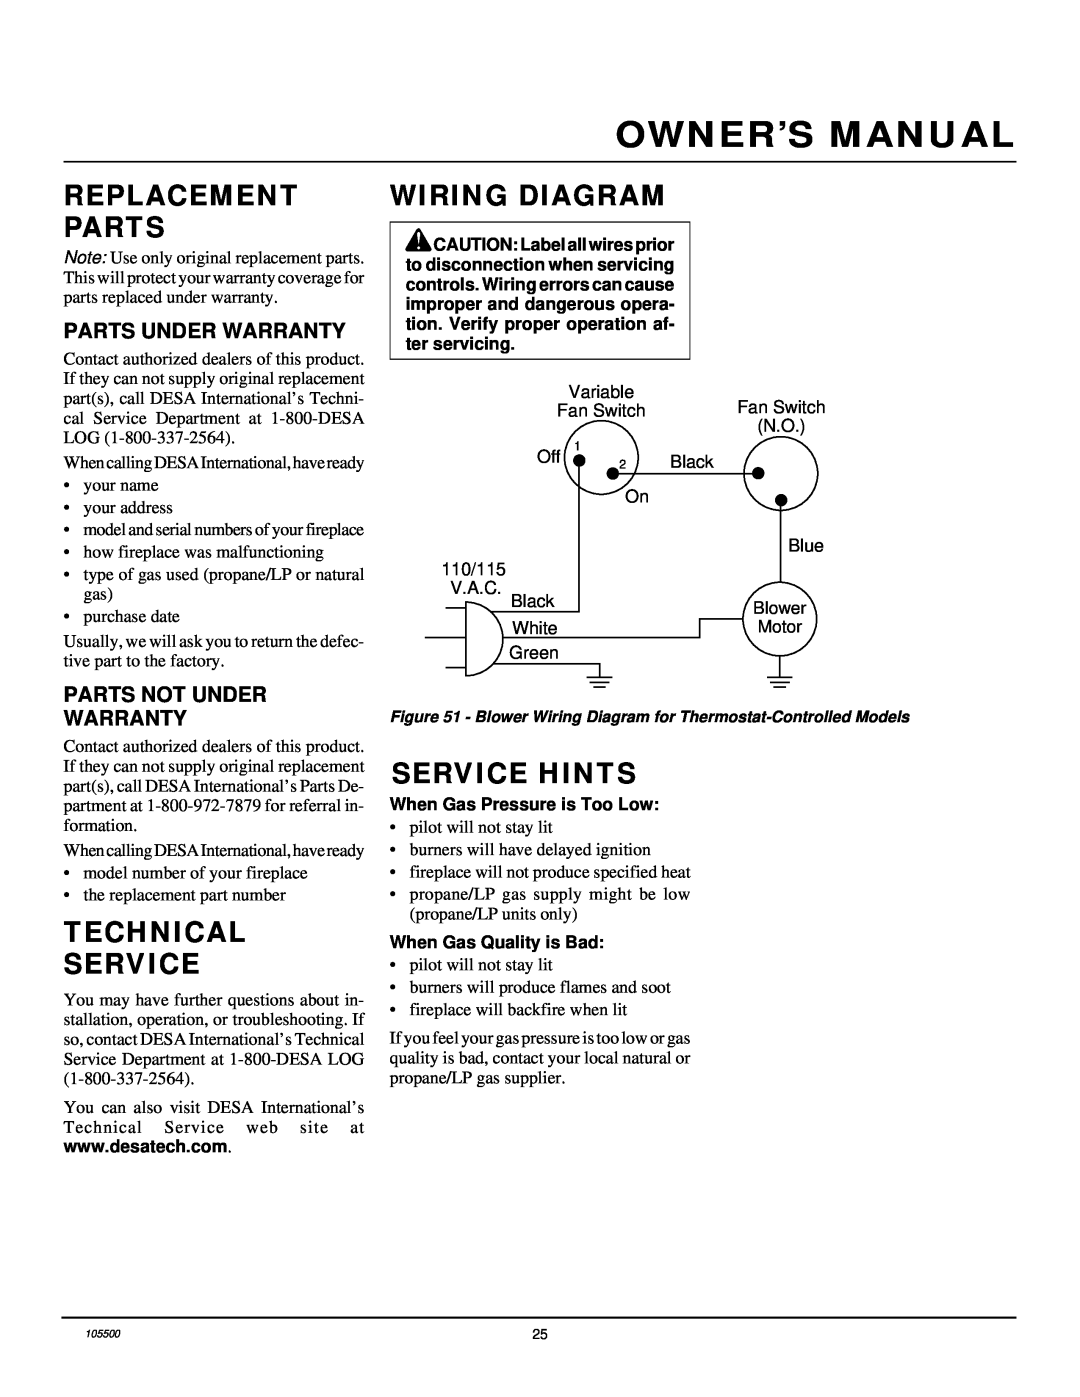 Desa SBVBN(A), SBVBP(A) Replacement Parts, Technical Service, Wiring Diagram, Service Hints, Parts Under Warranty 